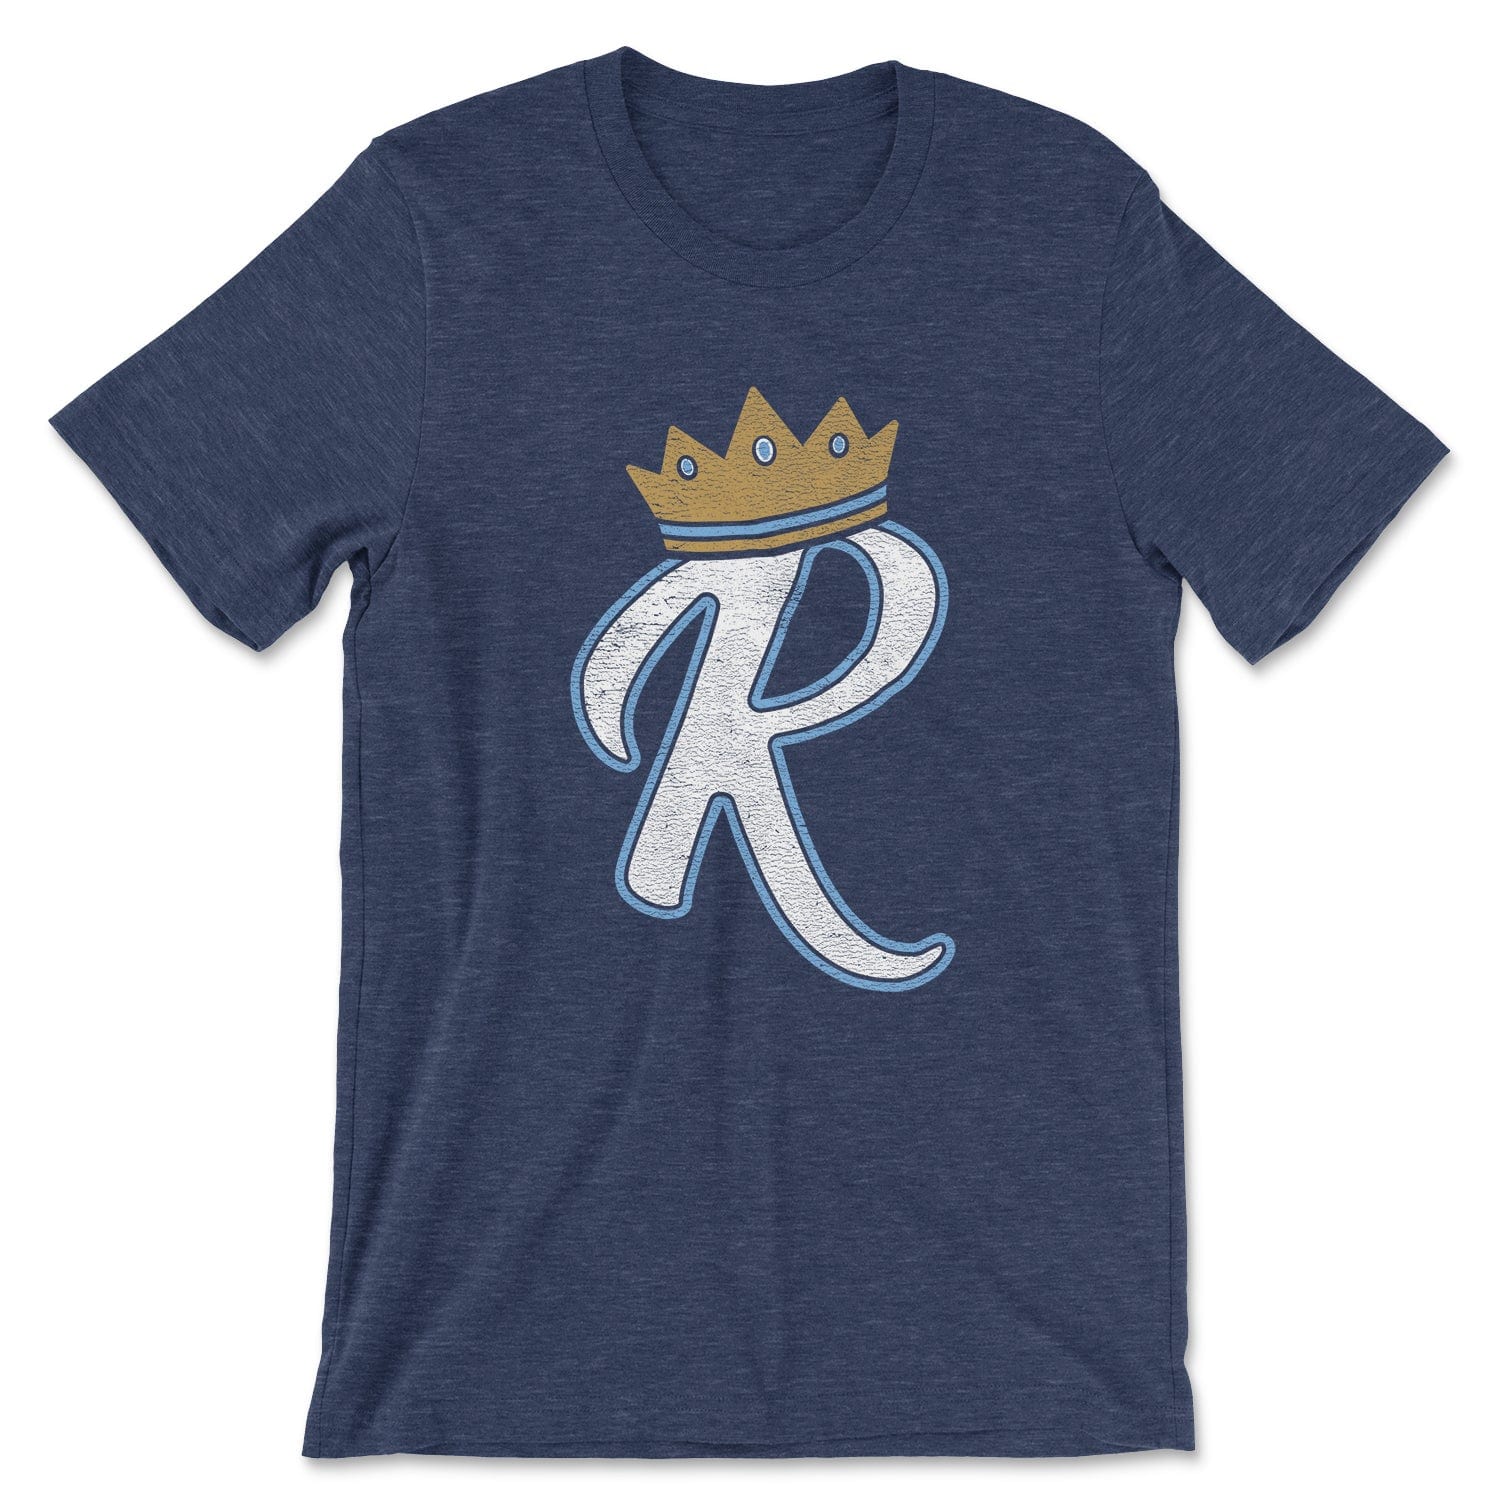 KC Swag Kansas City Royals lite blue/white BOLD R wearing Gold CROWN on heather navy t-shirt